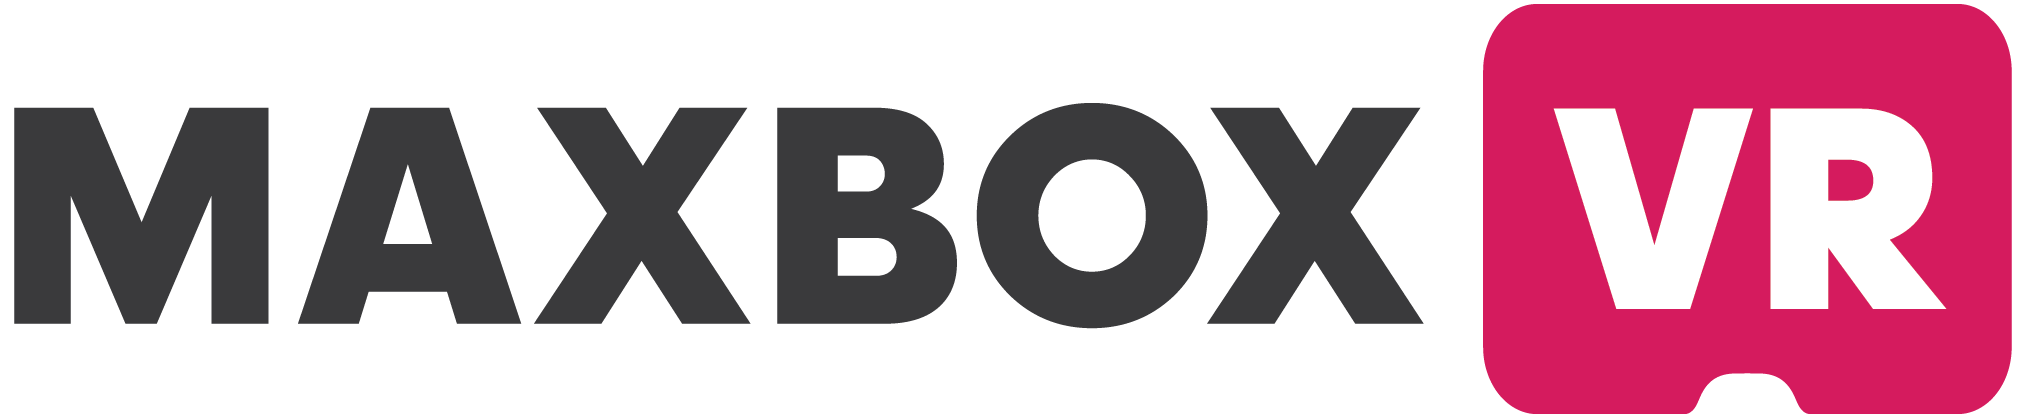 max box vr